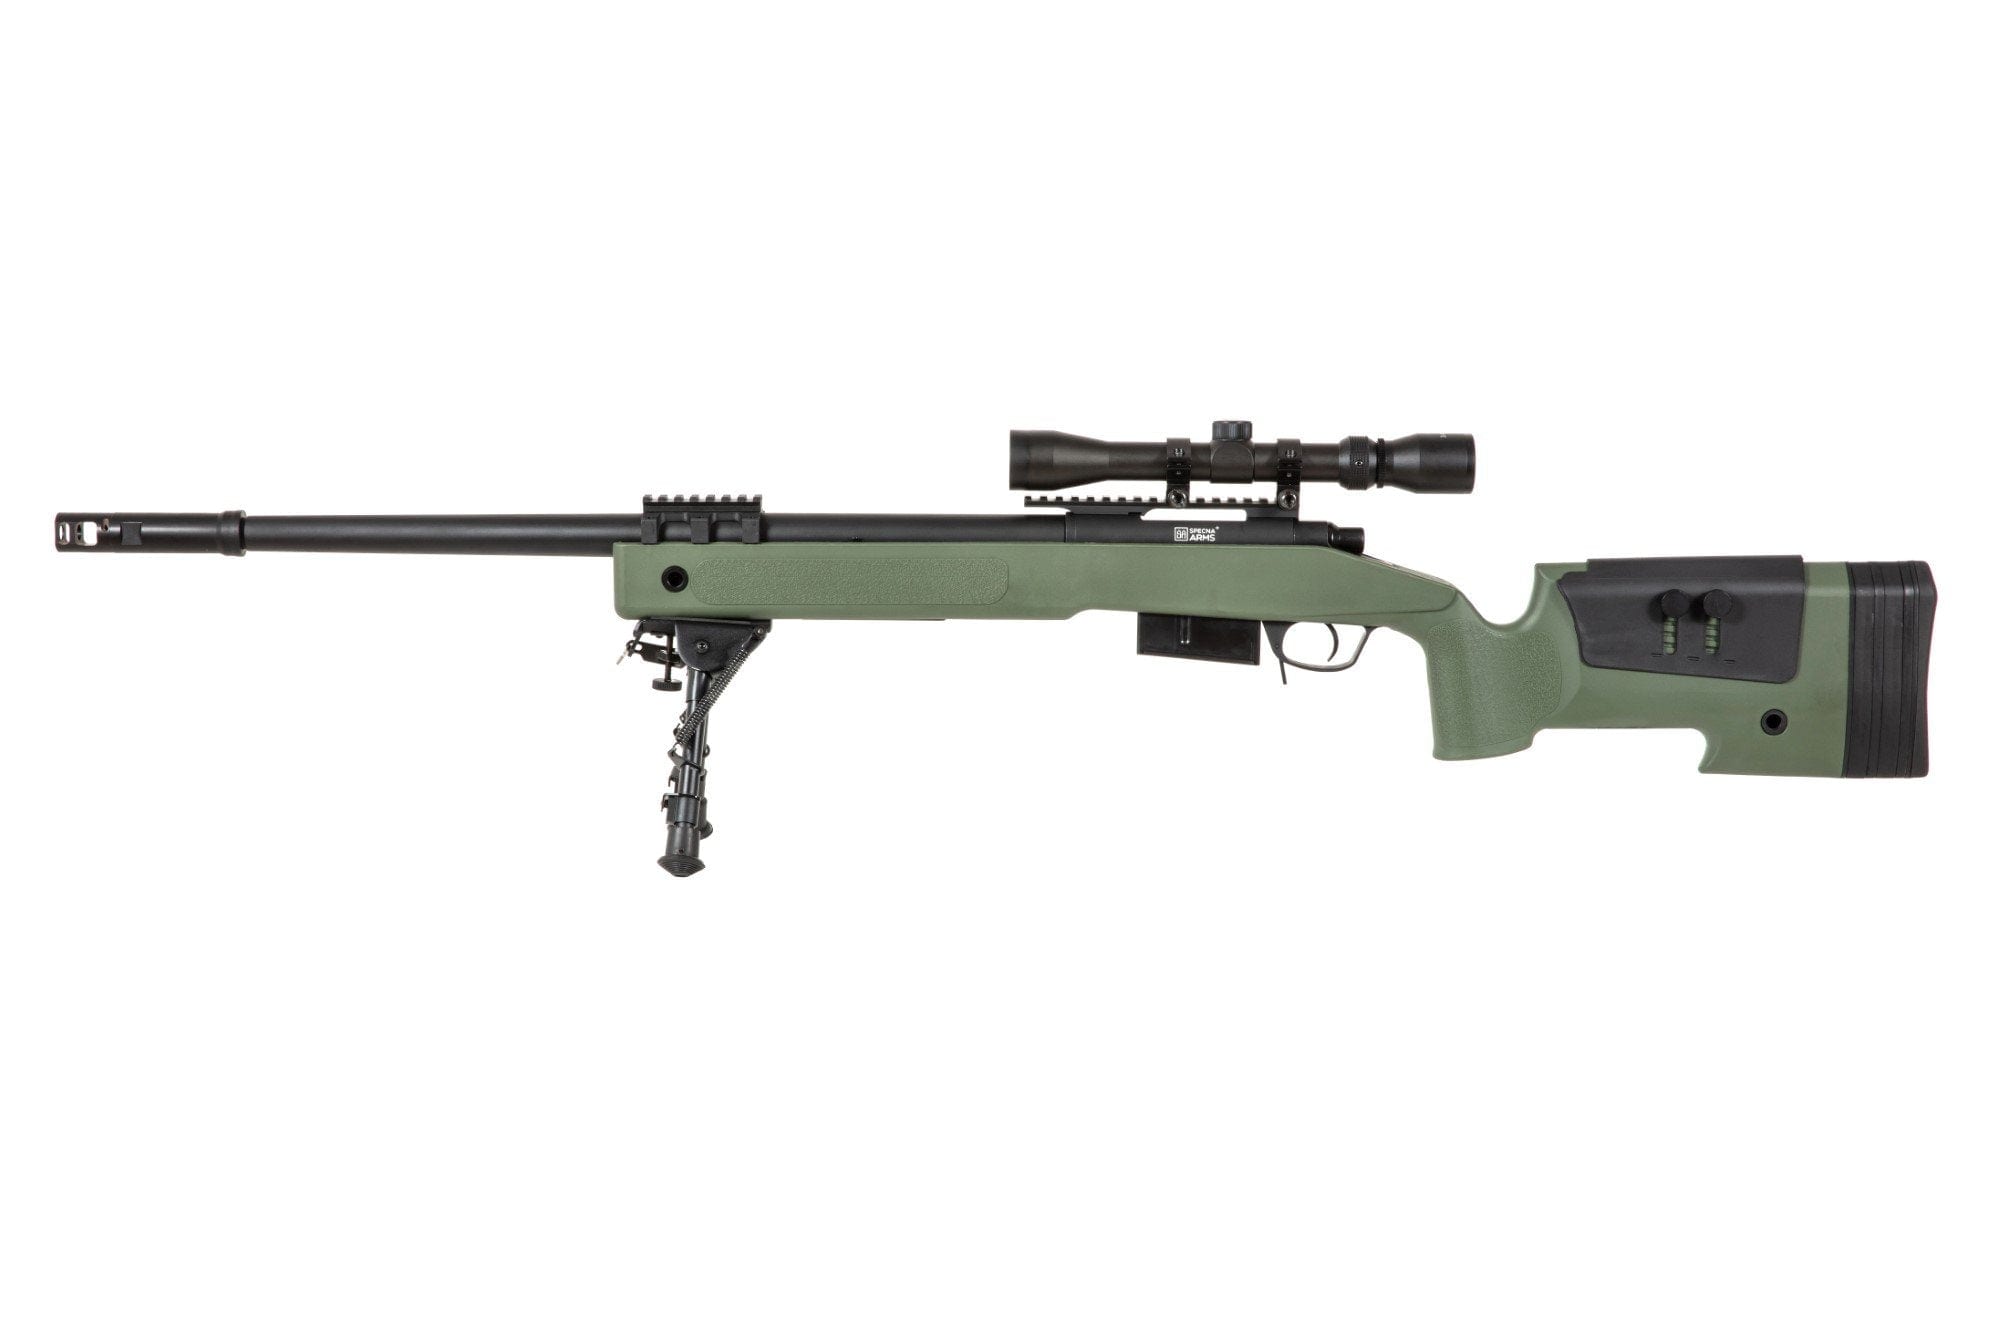 SA-S03 CORE™ High Velocity Sniper Rifle Replica with Scope and Bipod - olive